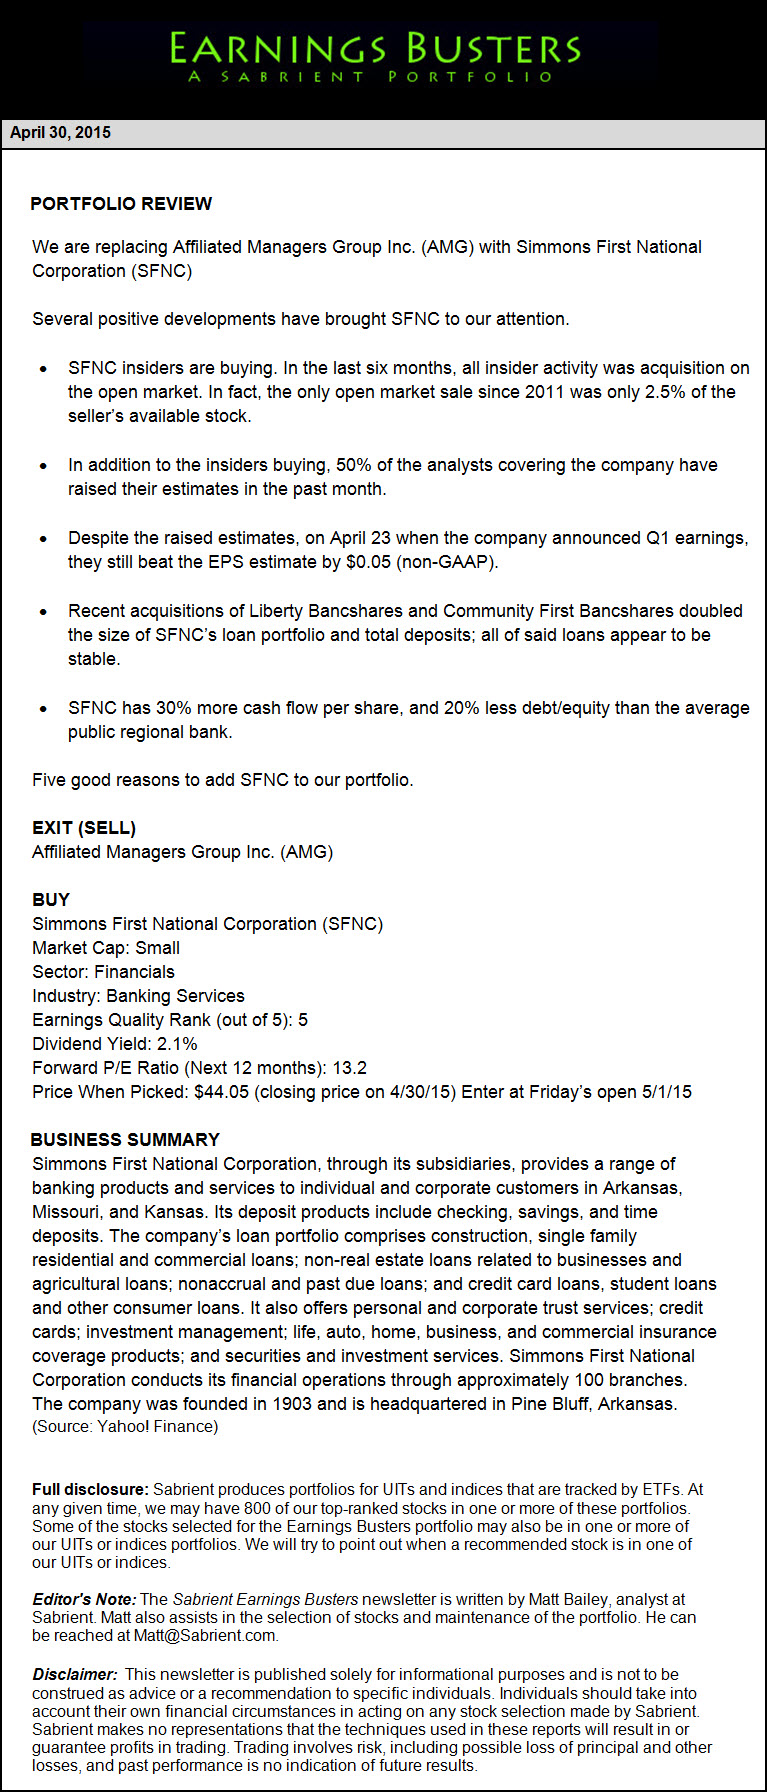 Earnings Busters Newsletter - April 30, 2015